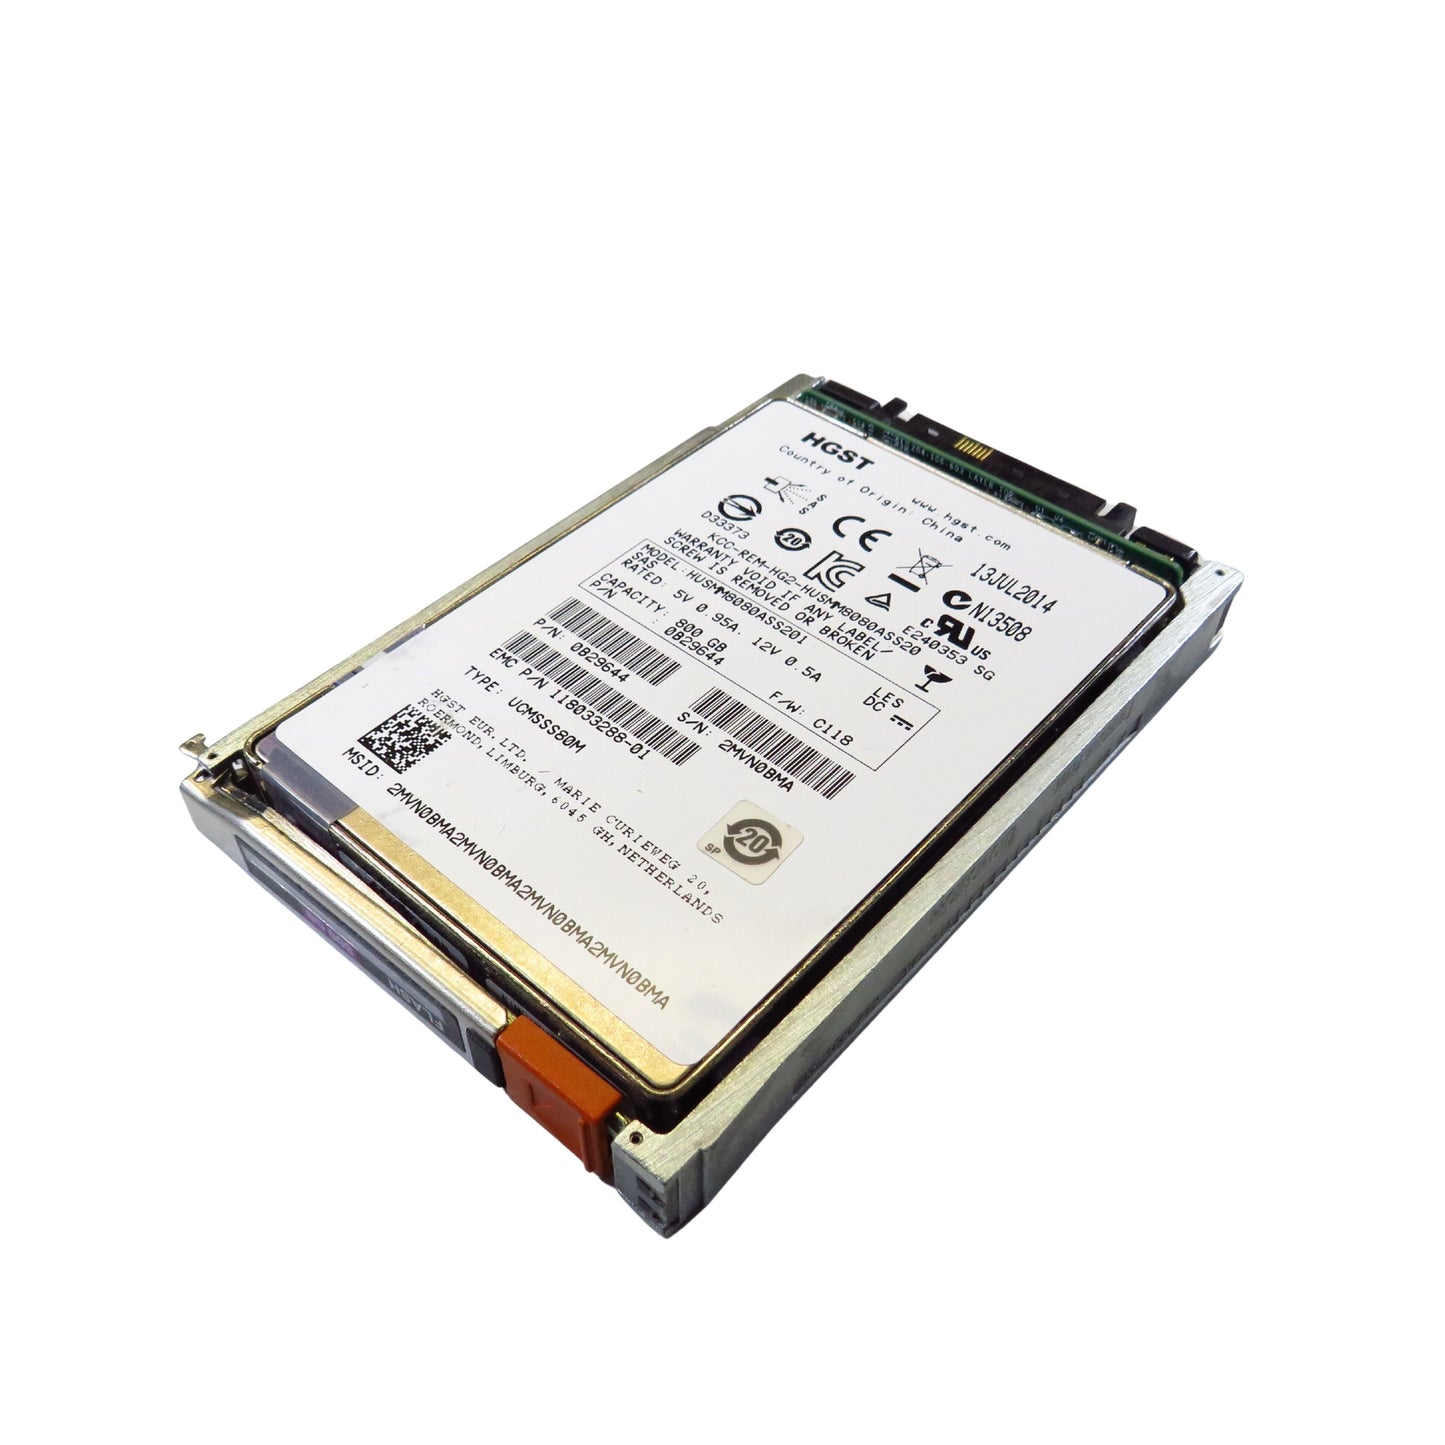 EMC 005050674 800GB 2.5" SAS 12Gbps MLC SSD Solid State Drive (Refurbished)